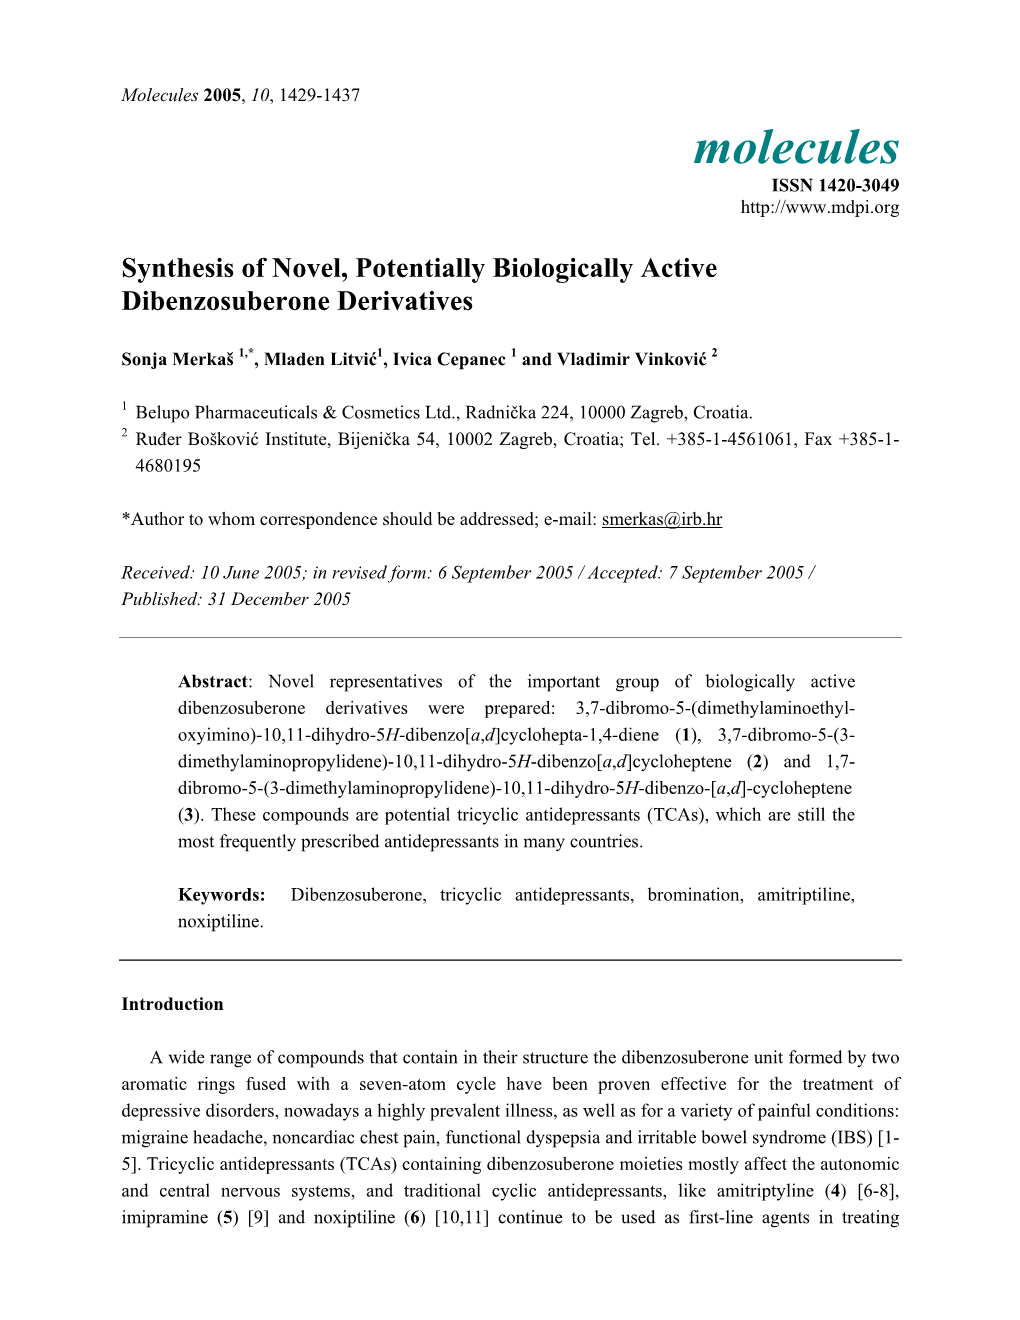 Synthesis of Novel, Potentially Biologically Active Dibenzosuberone Derivatives